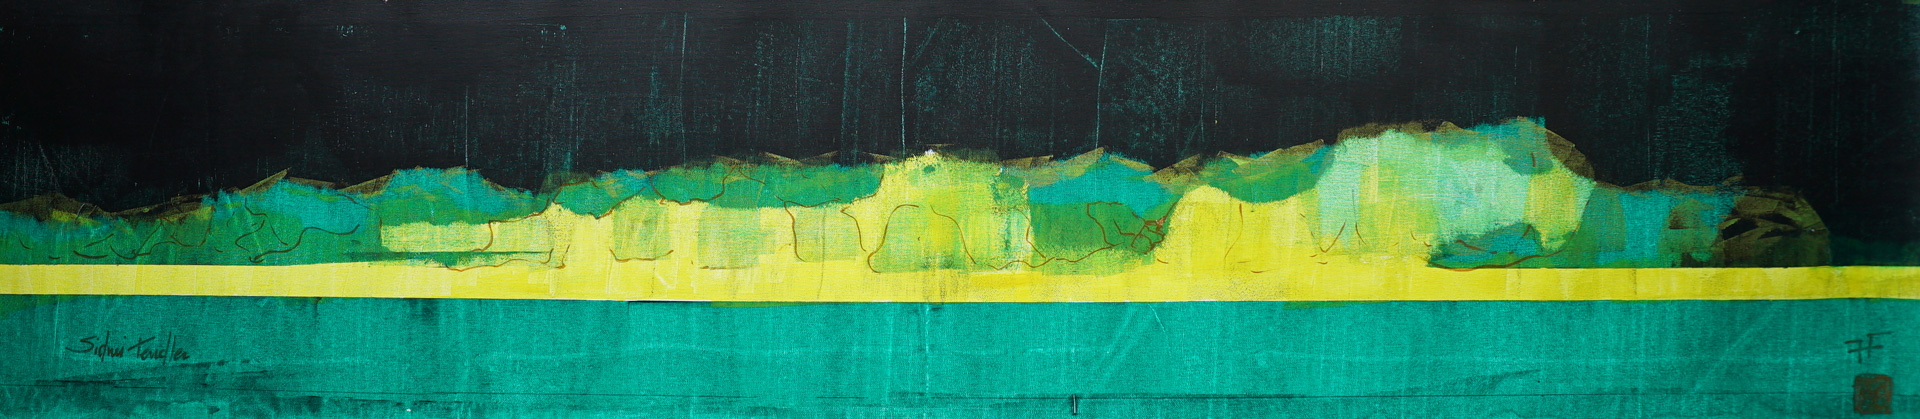 sos-amazonia-sydnei-tendler-abstract-painting